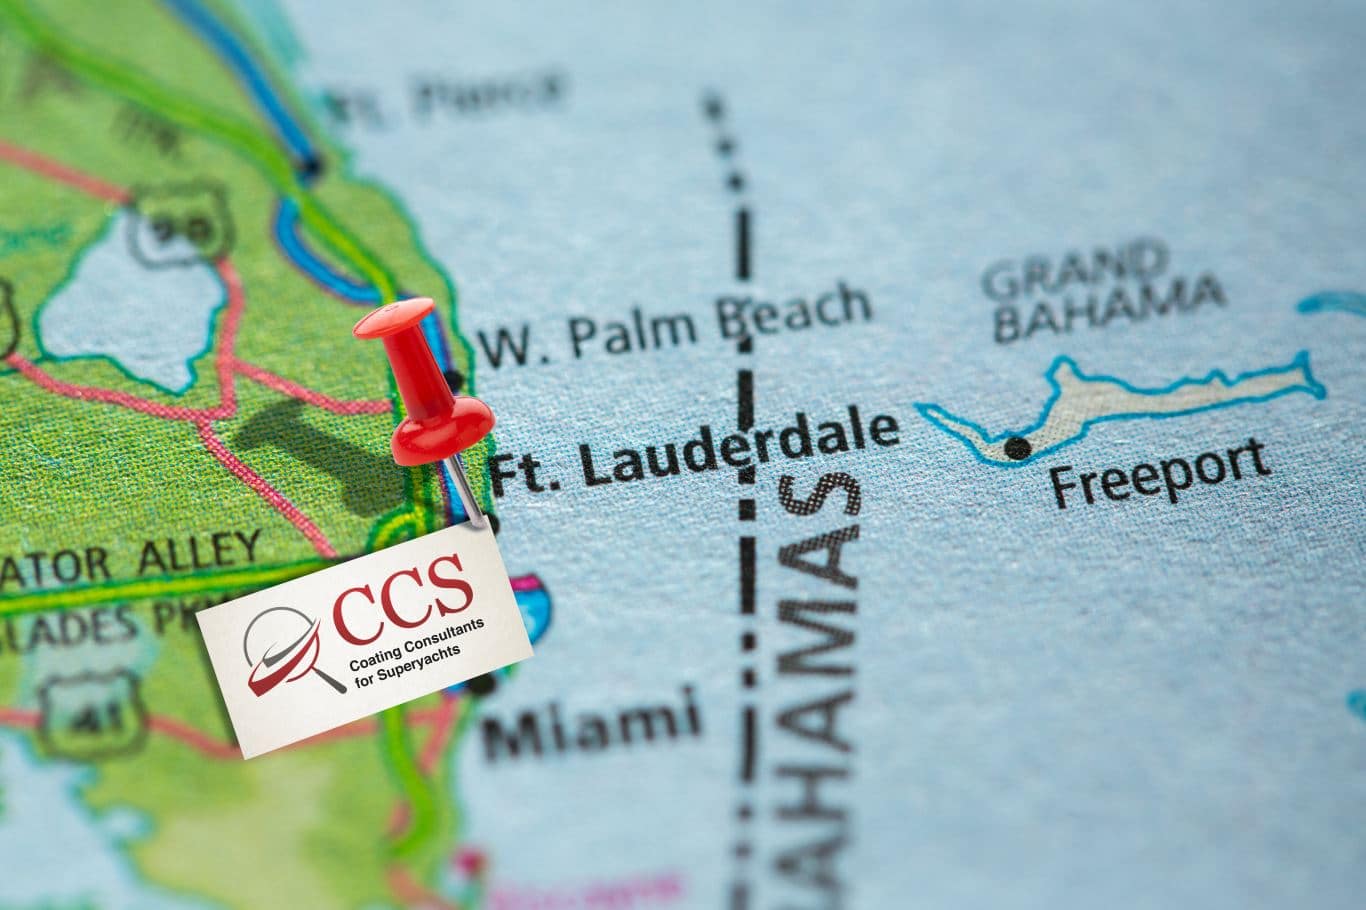 CCS in Fort Lauderdale